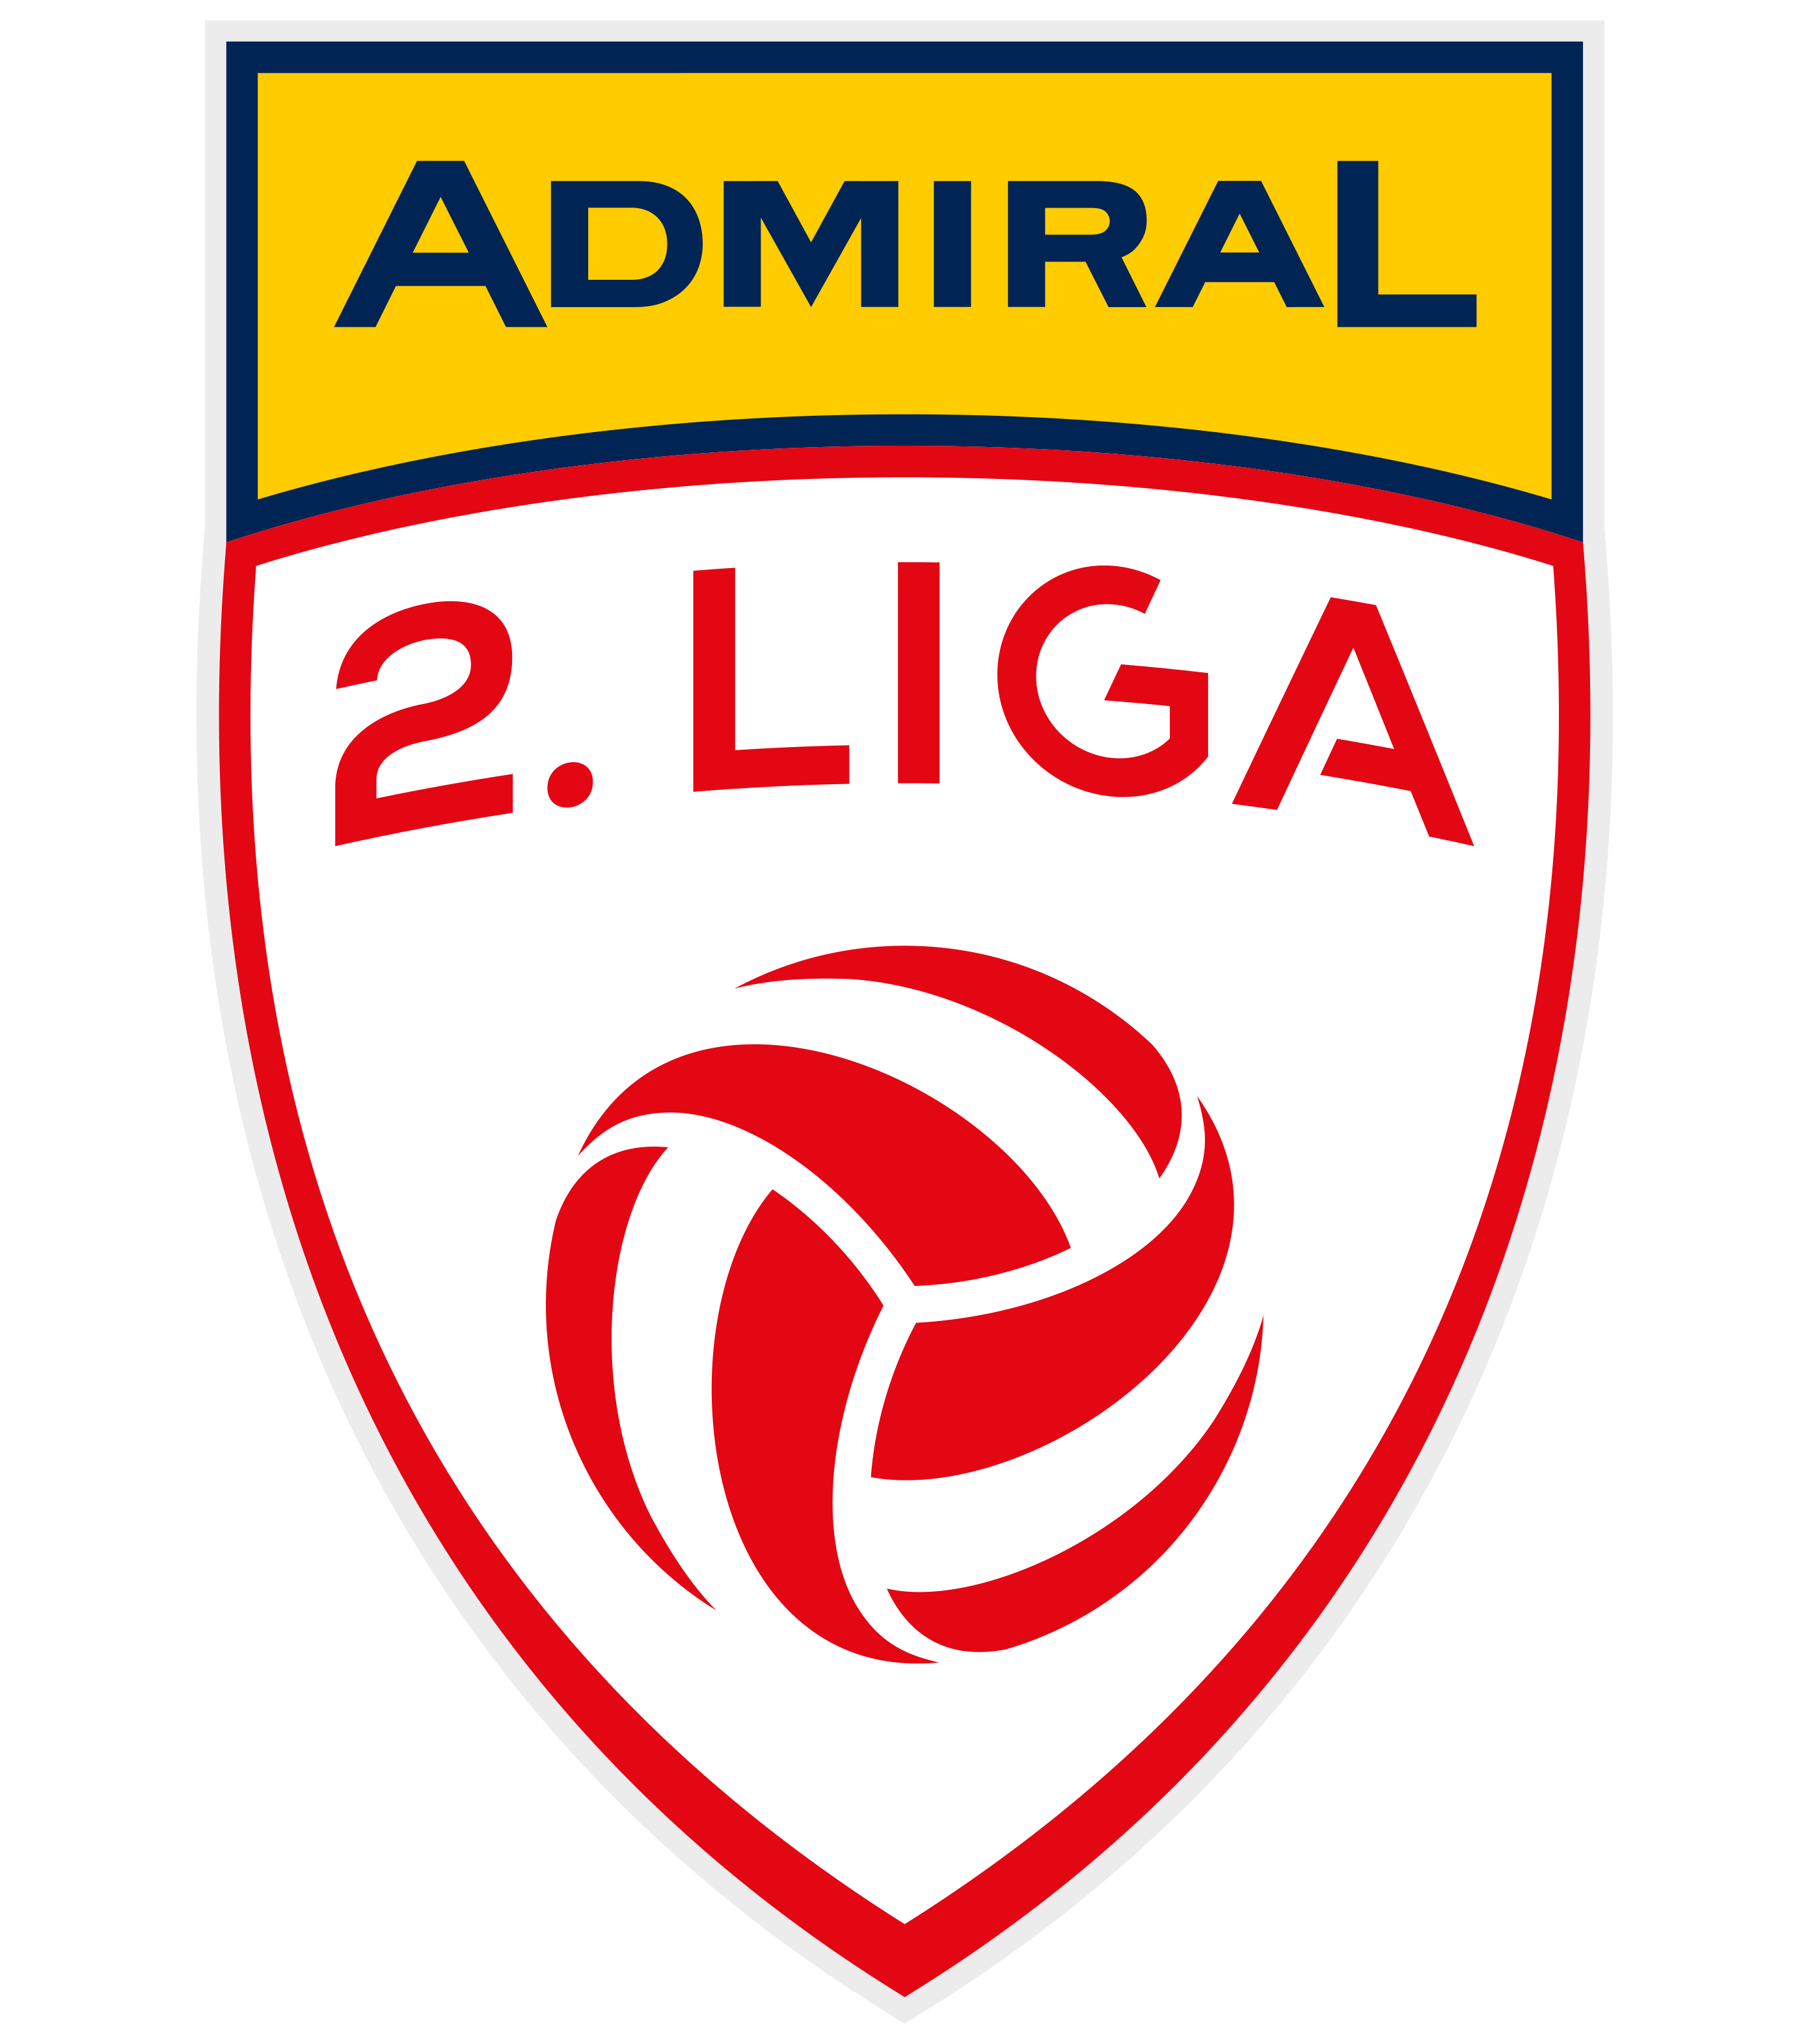 Admiral - 2.Liga